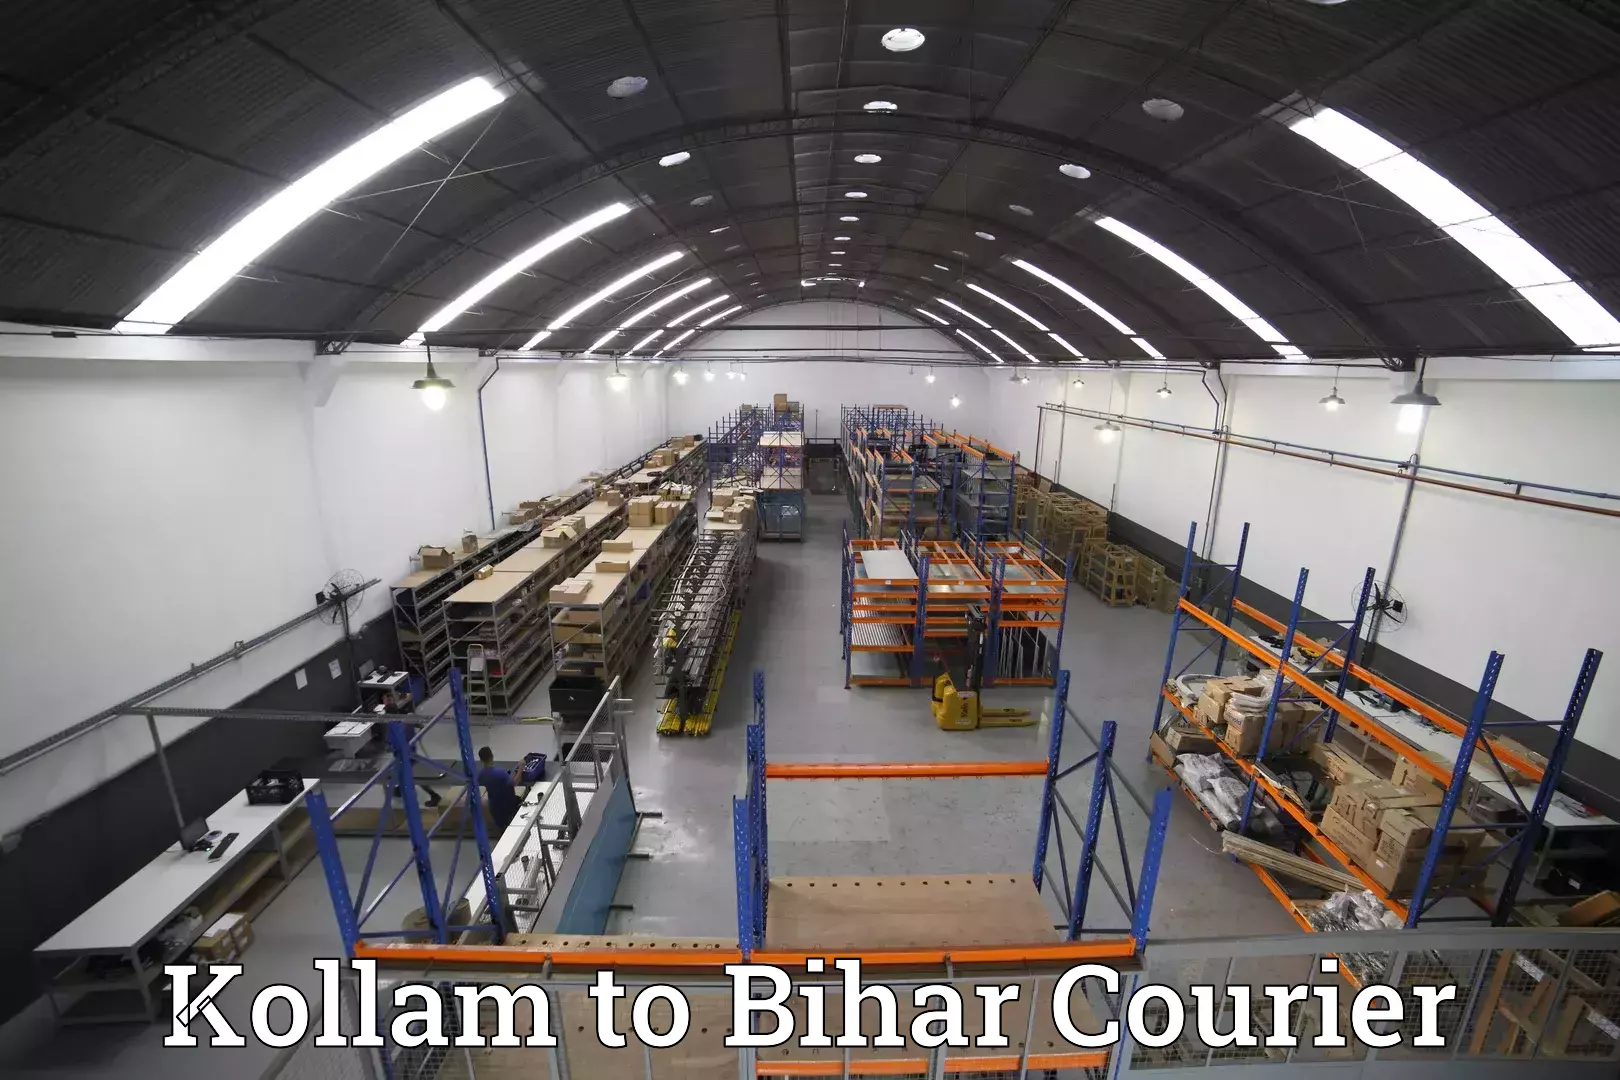 Luggage transport company Kollam to Bihar